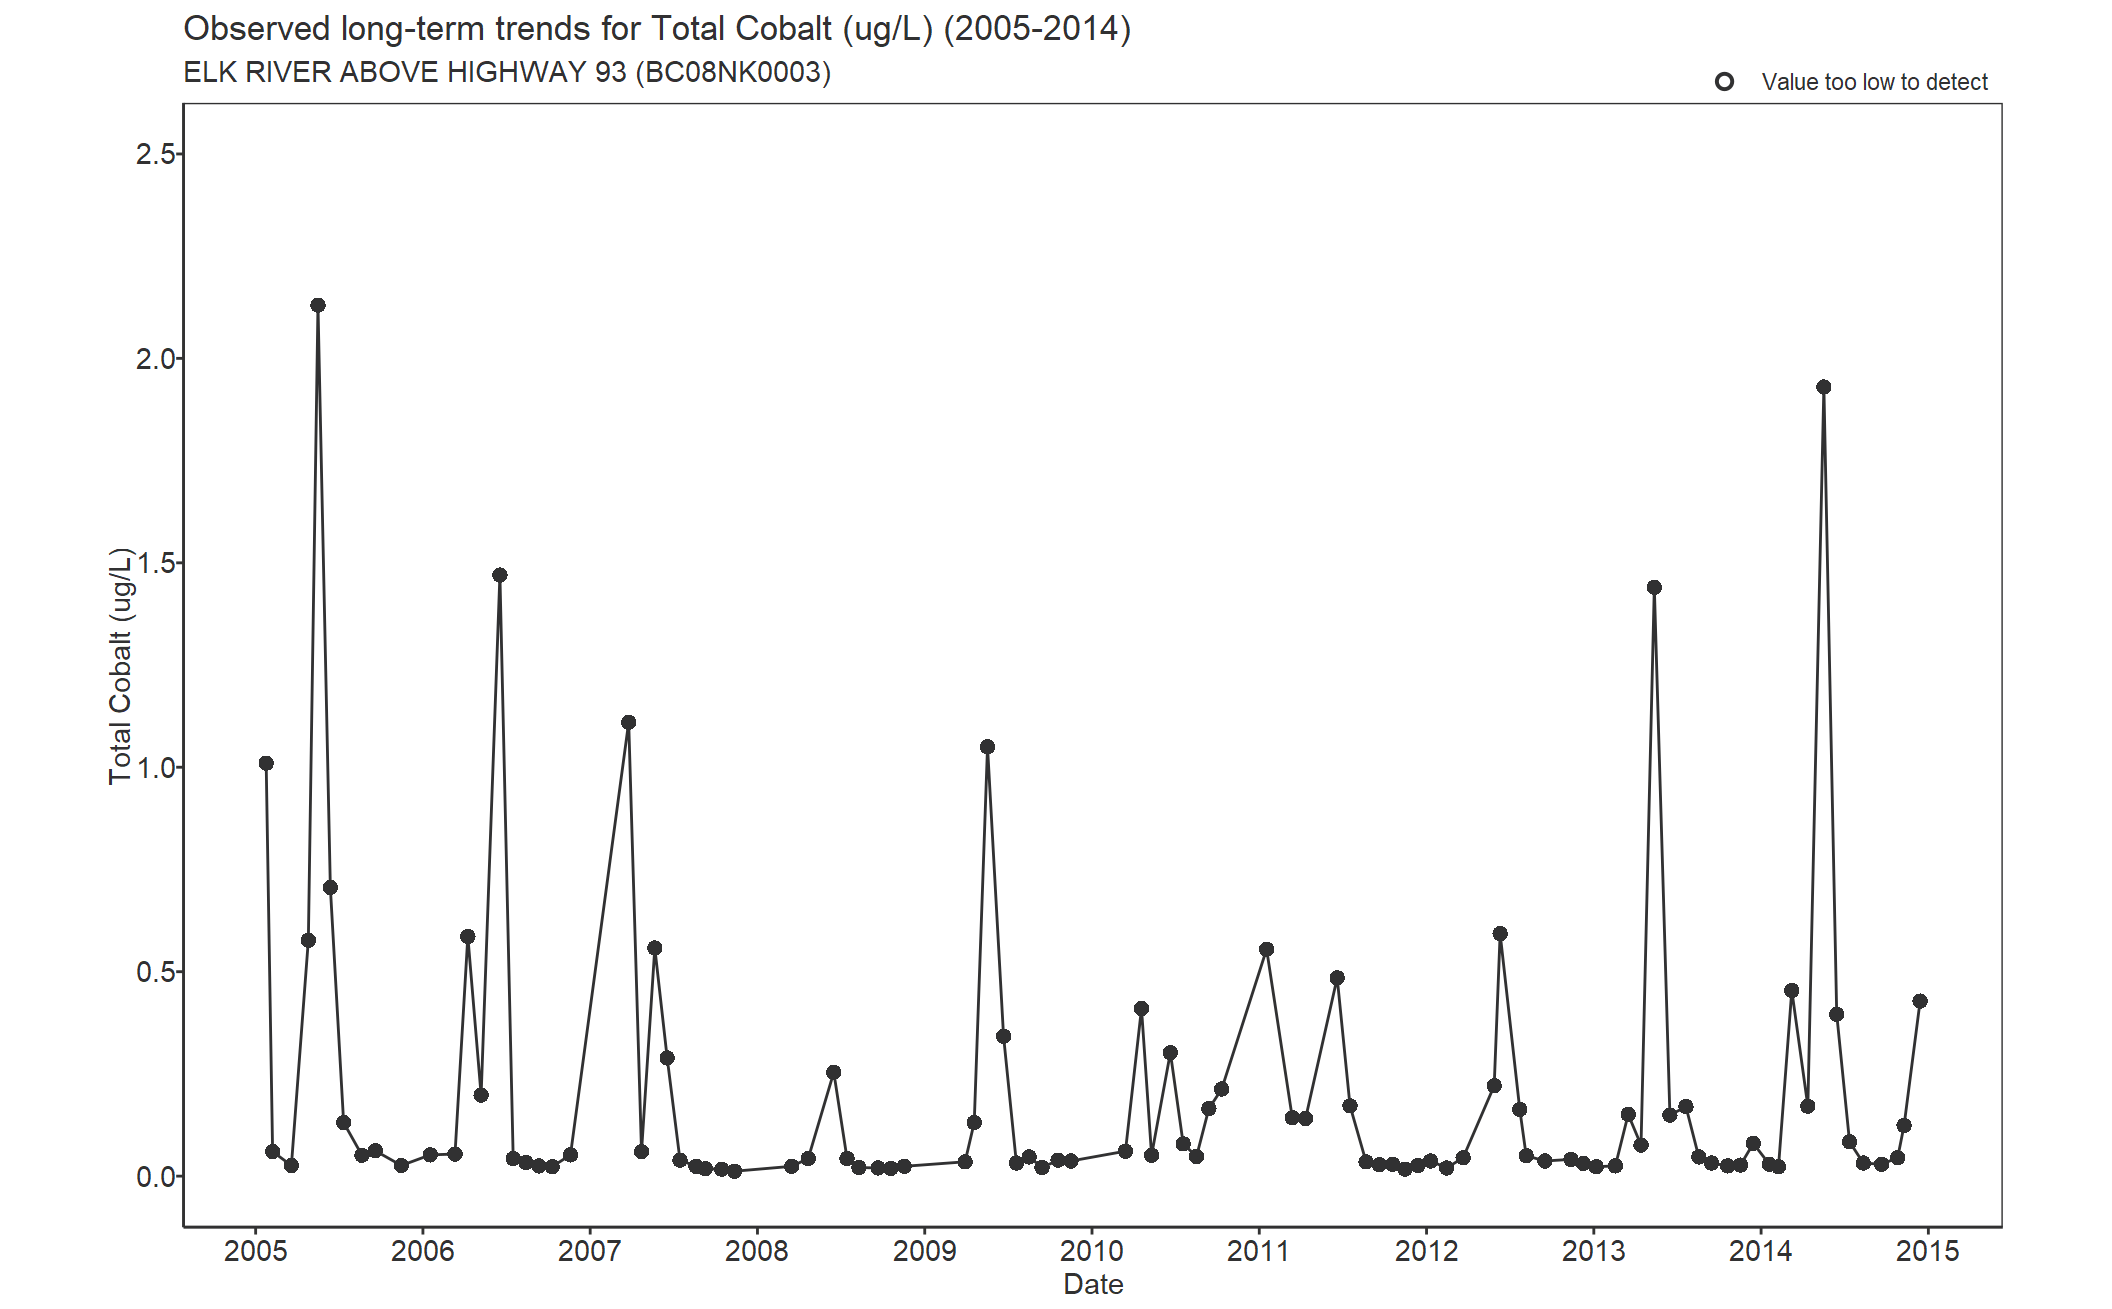 Observed long-term trends for Cobalt Total (2005-2014)